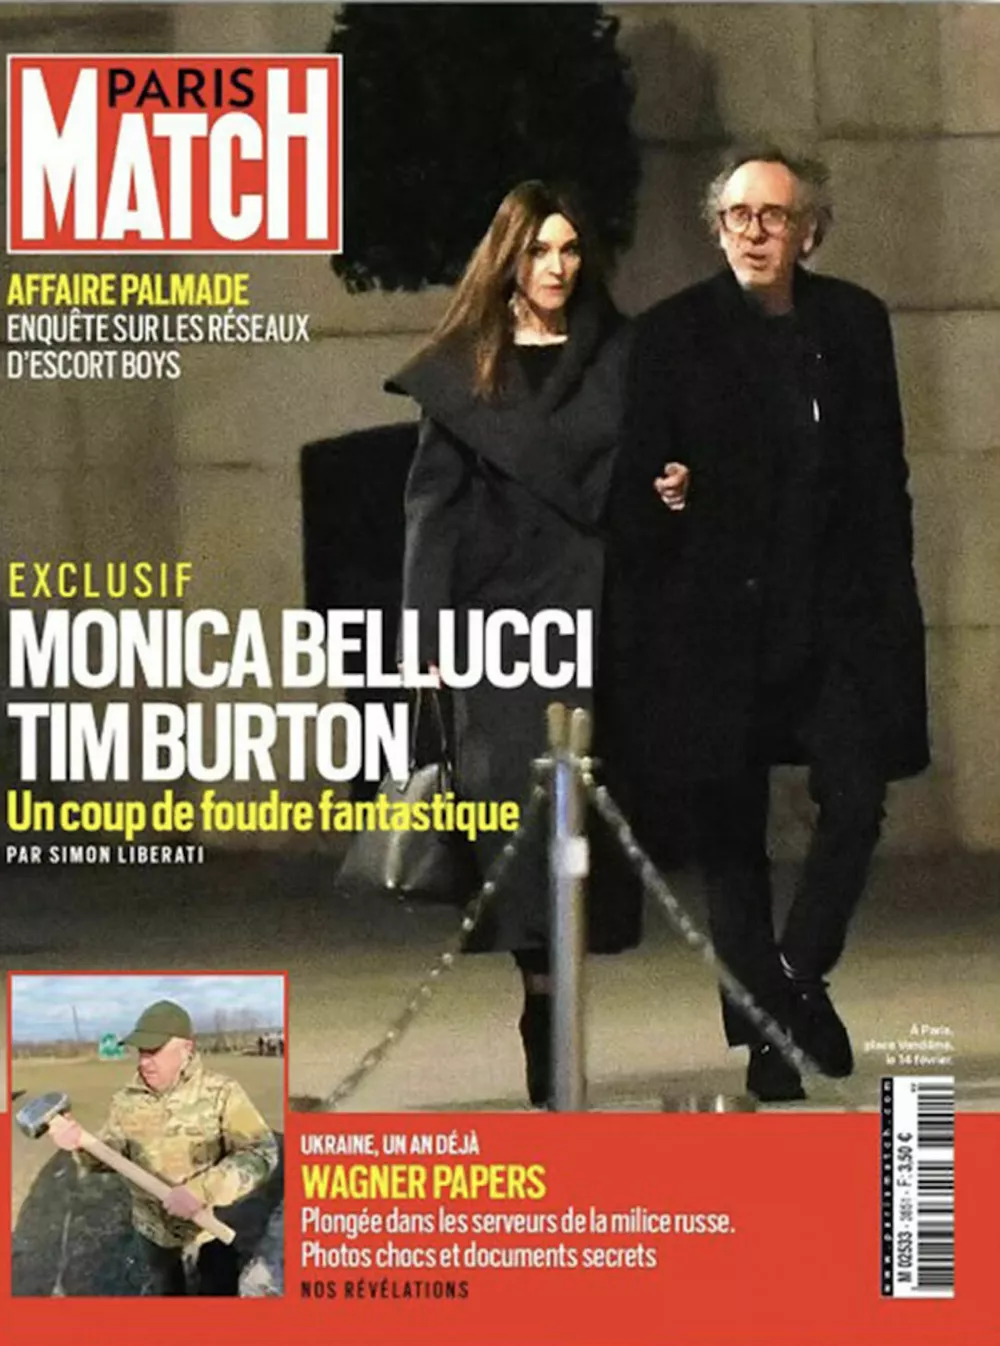 Папарацци поймали Монику Беллуччи и Тима Бертона в Париже